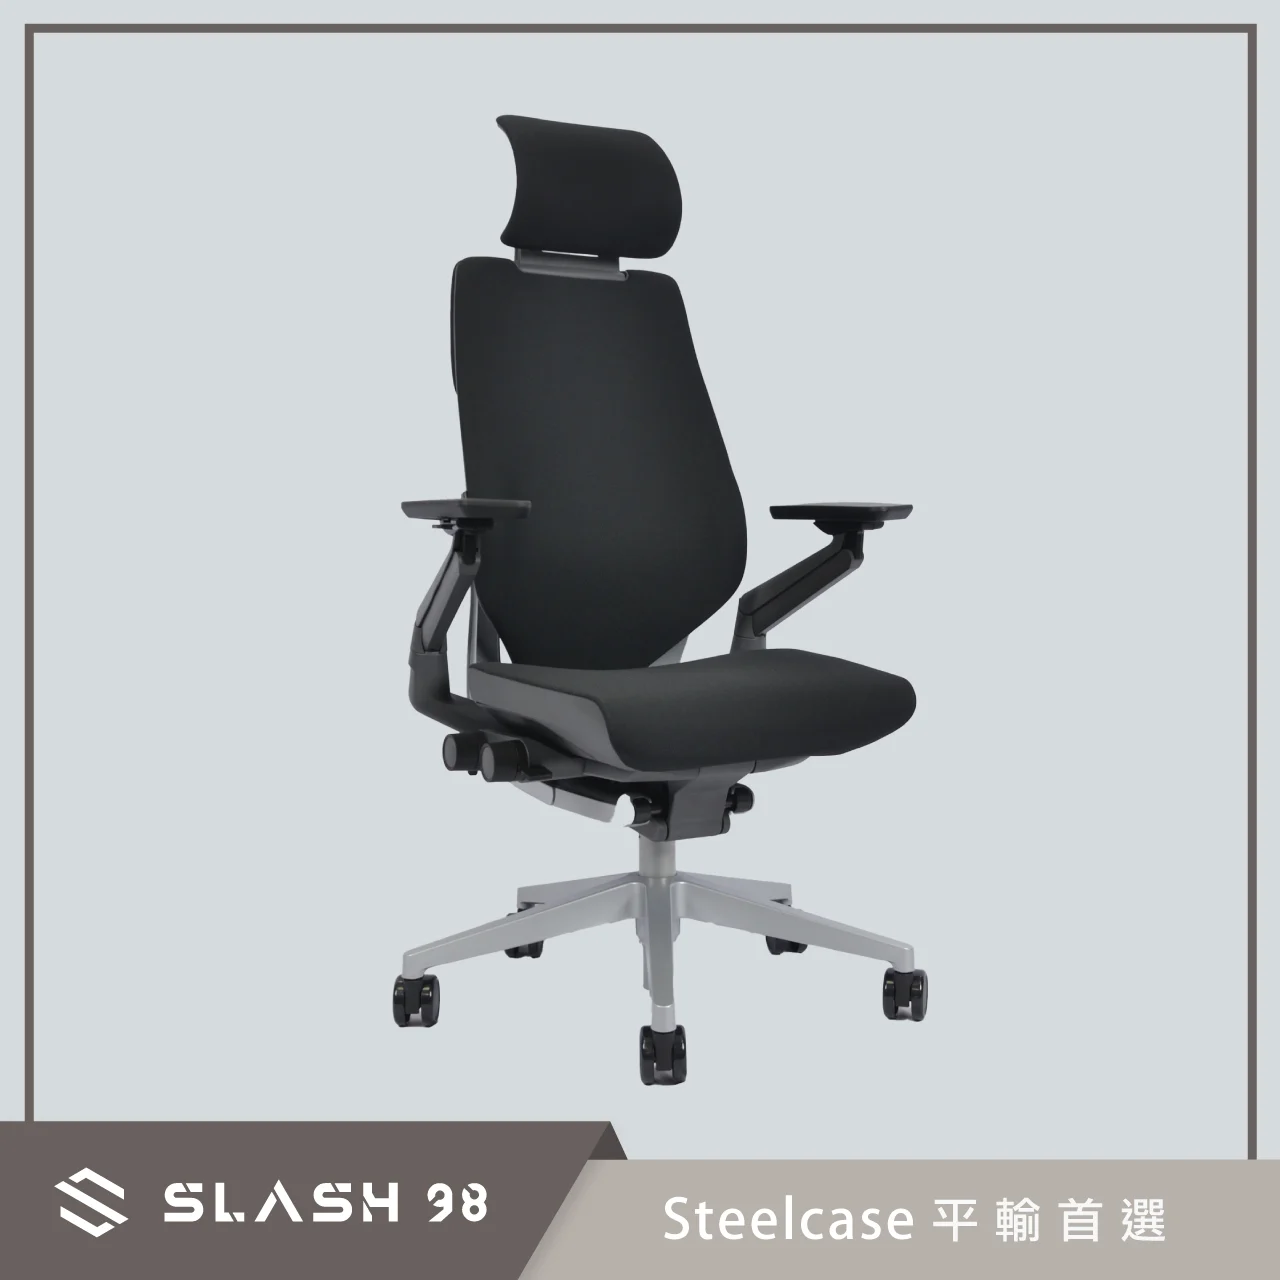 Slash 98 商品圖片 2022.11.15